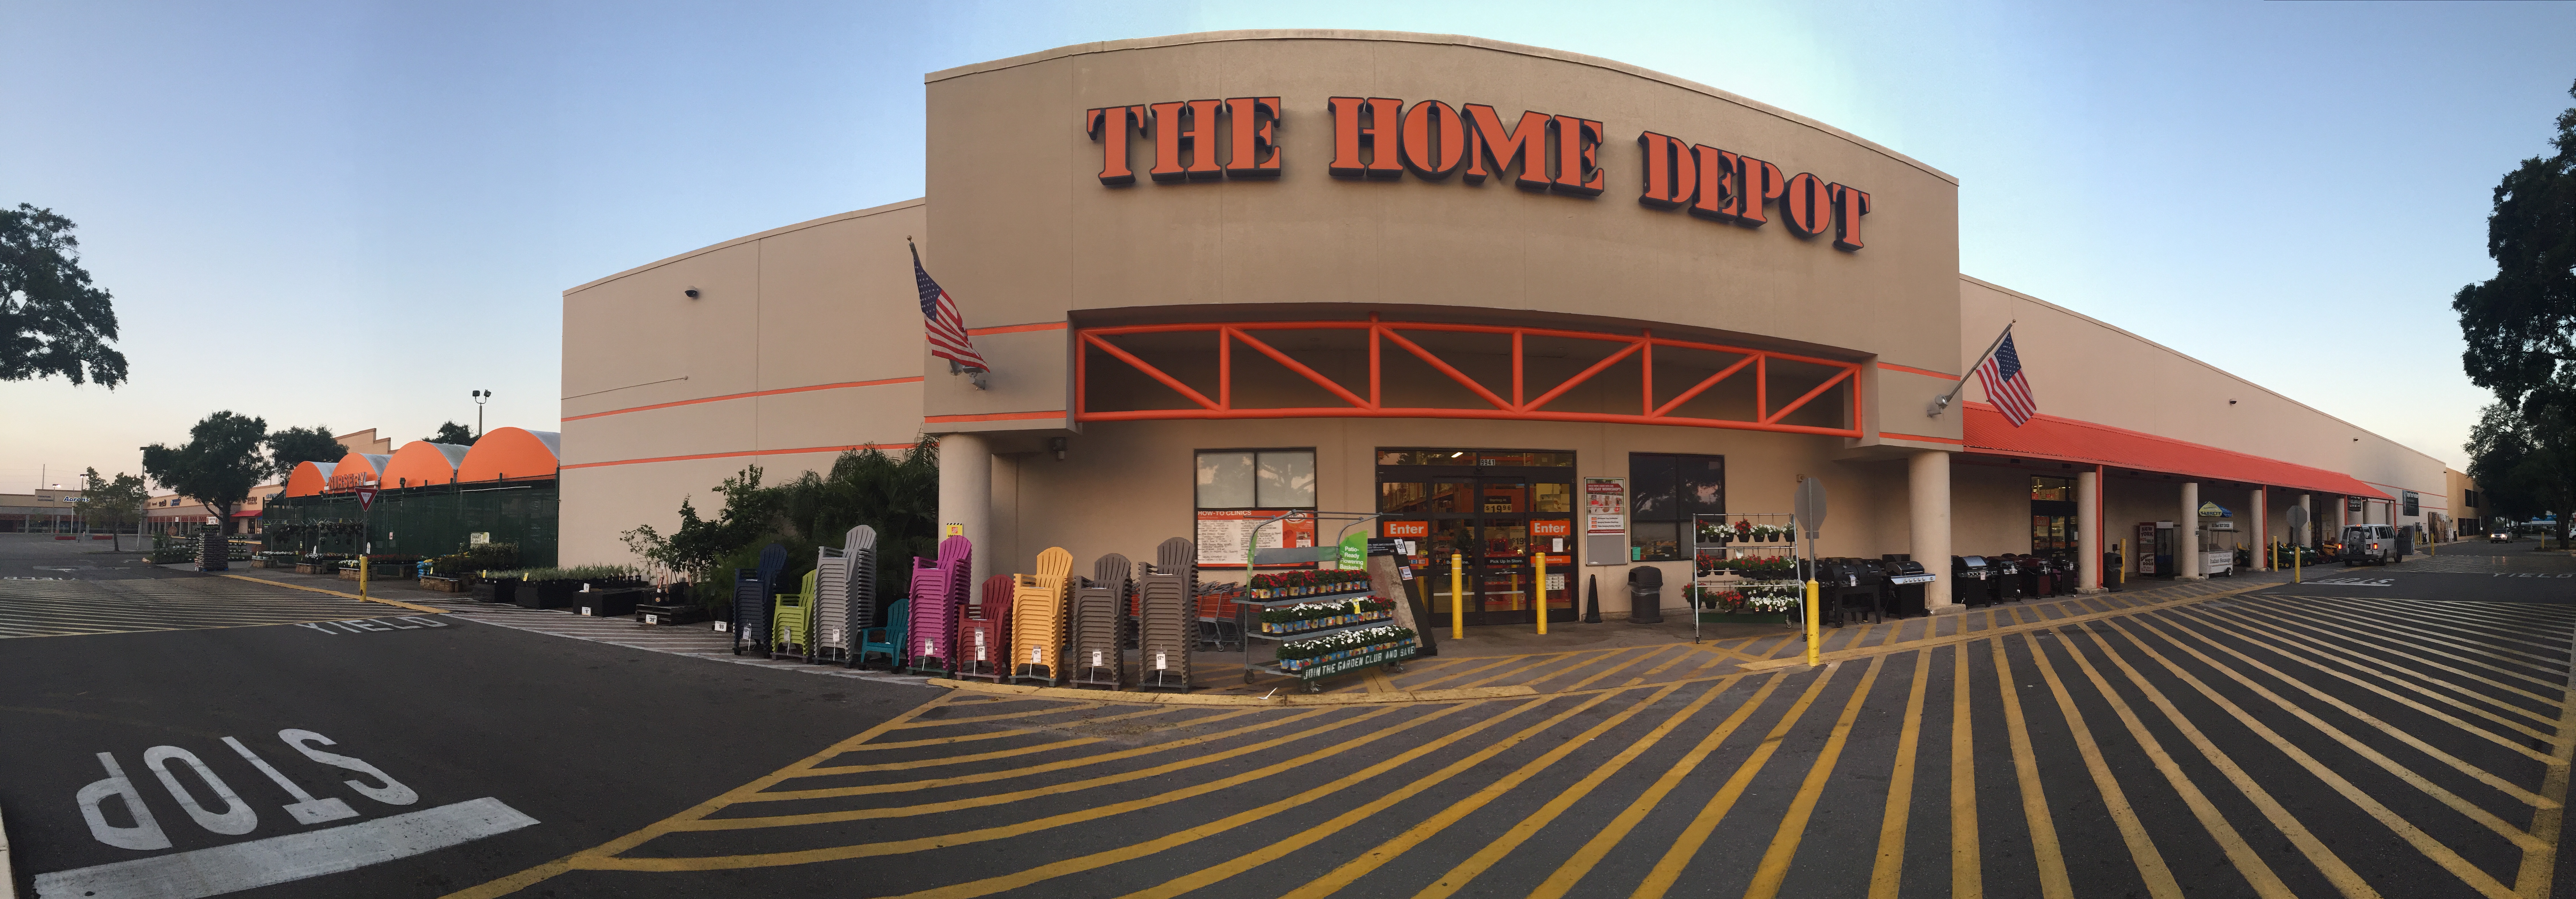 The Home Depot - Tampa, FL | homedepot.com | 813-664-0042